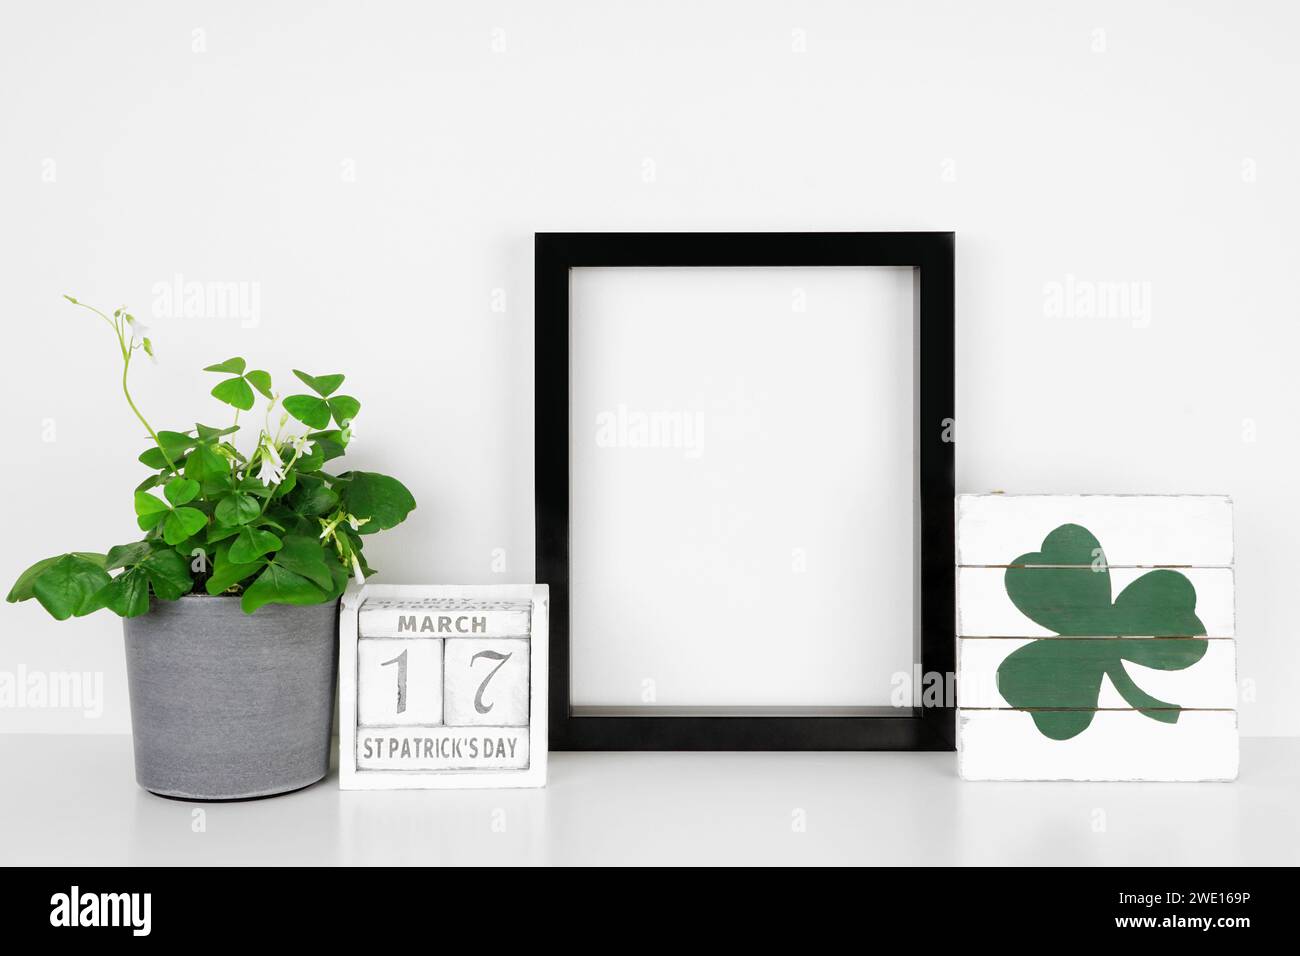 Mock up black frame with St Patricks Day decor on a white shelf. Shamrock plant, shabby chic wood calendar and sign. Portrait frame against a white wa Stock Photo